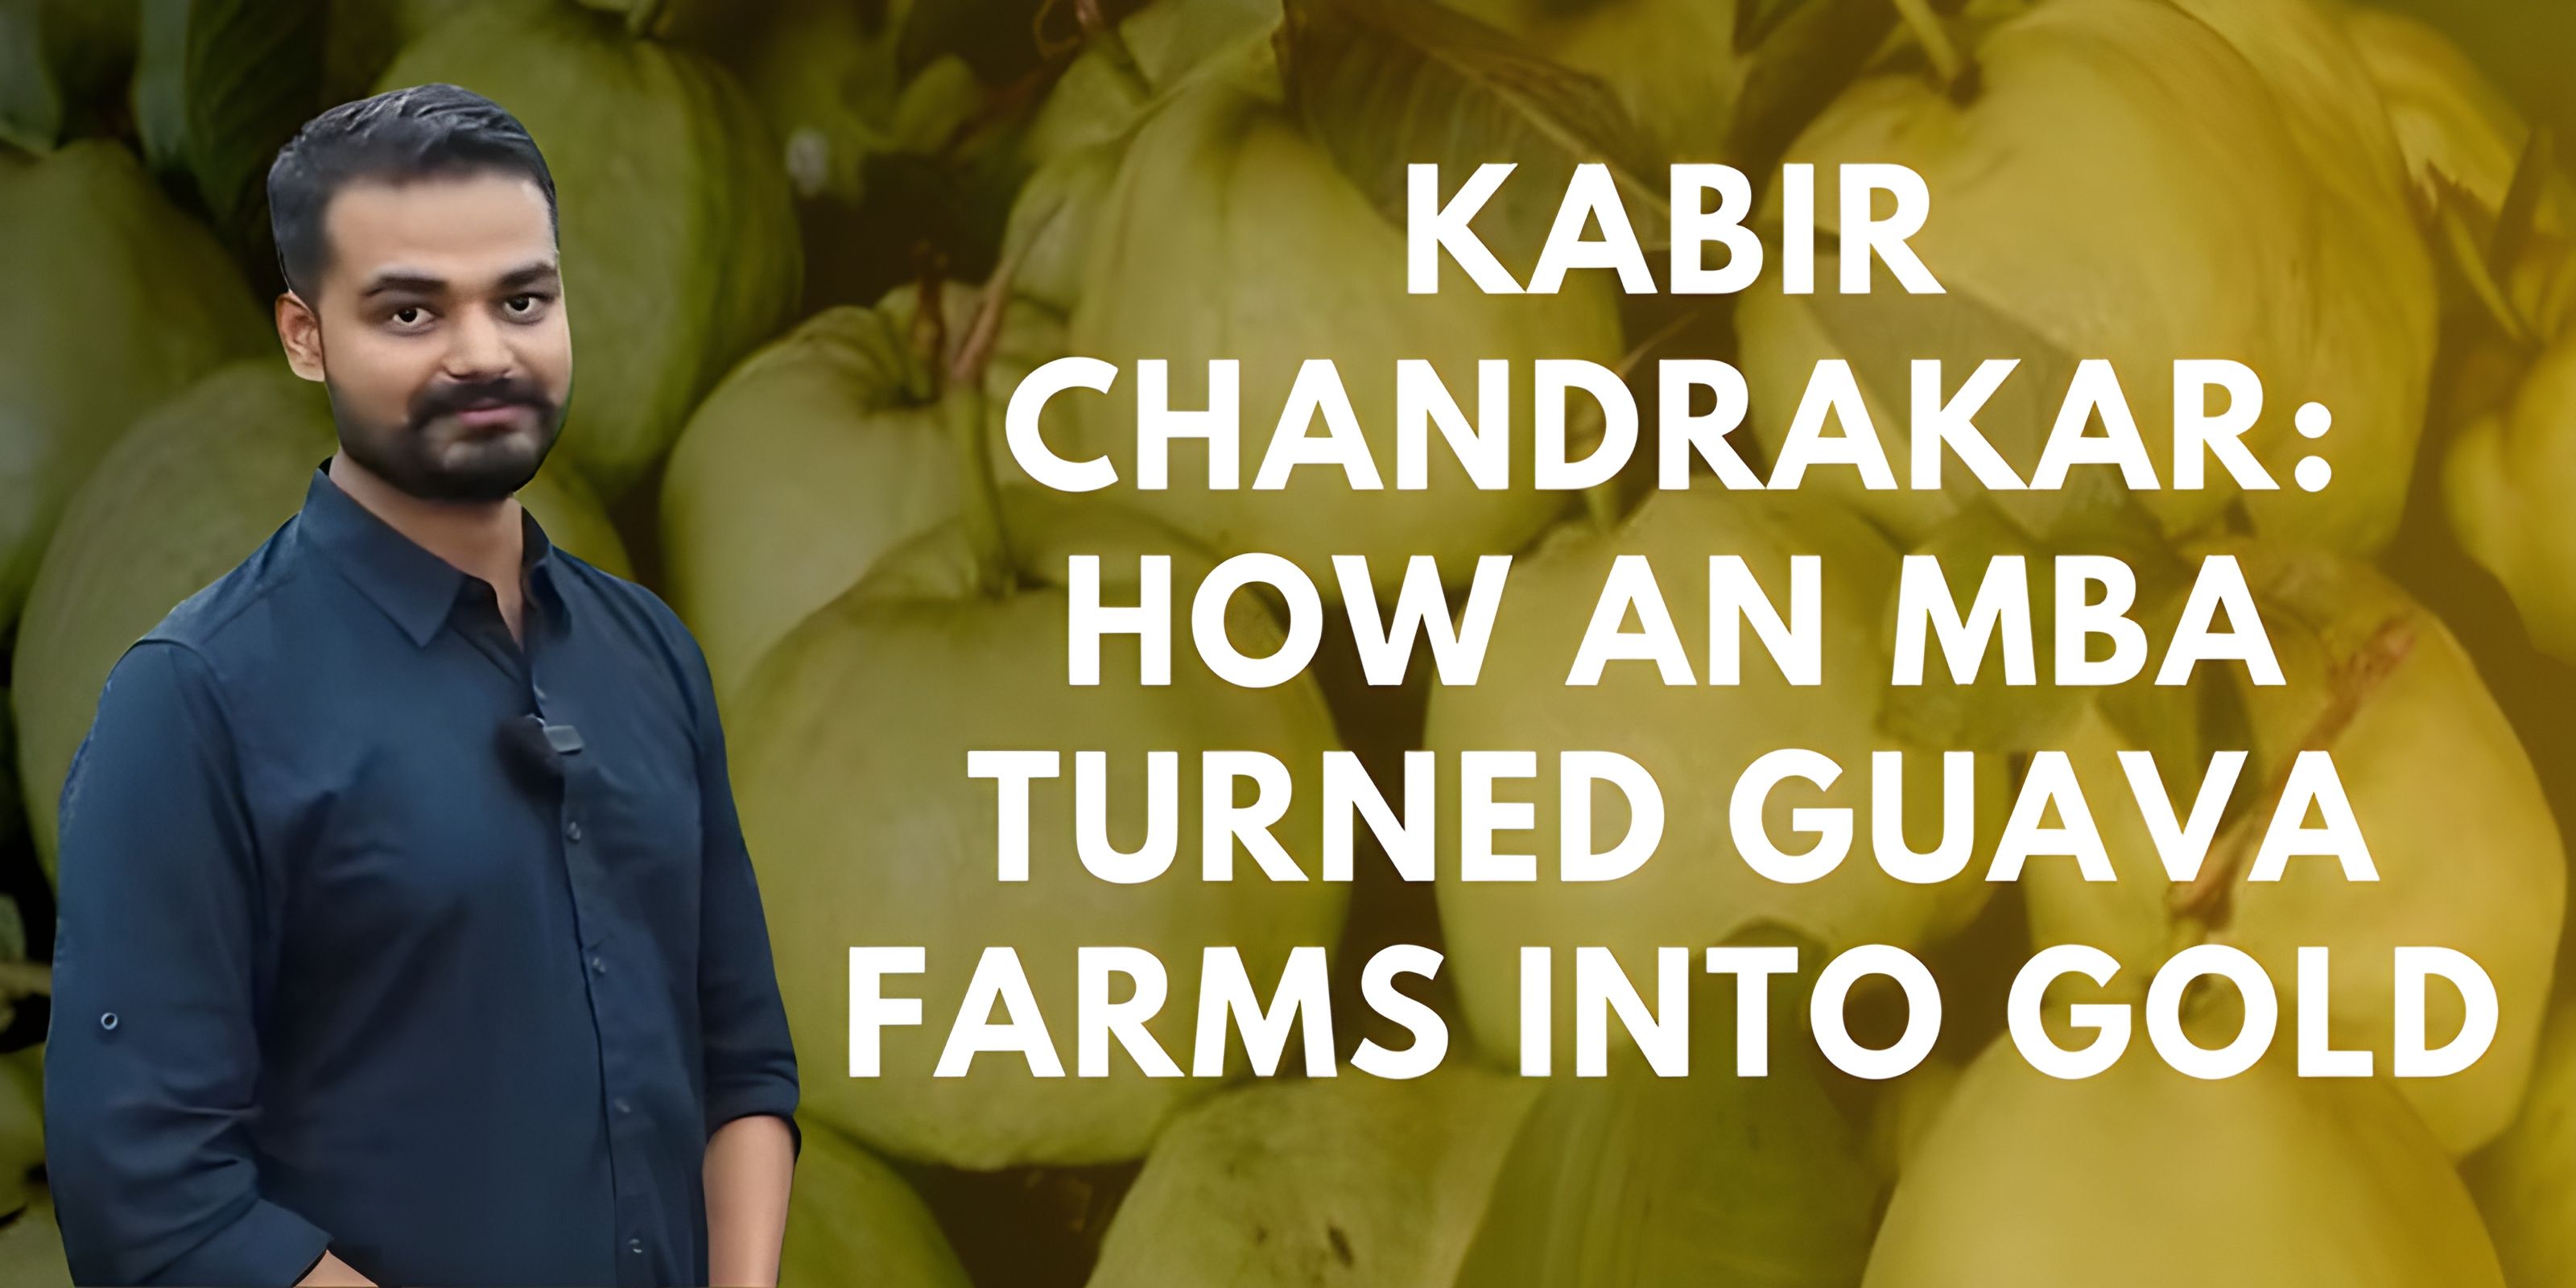 Kabir Chandrakar: How an MBA Turned Guava Farms into Gold